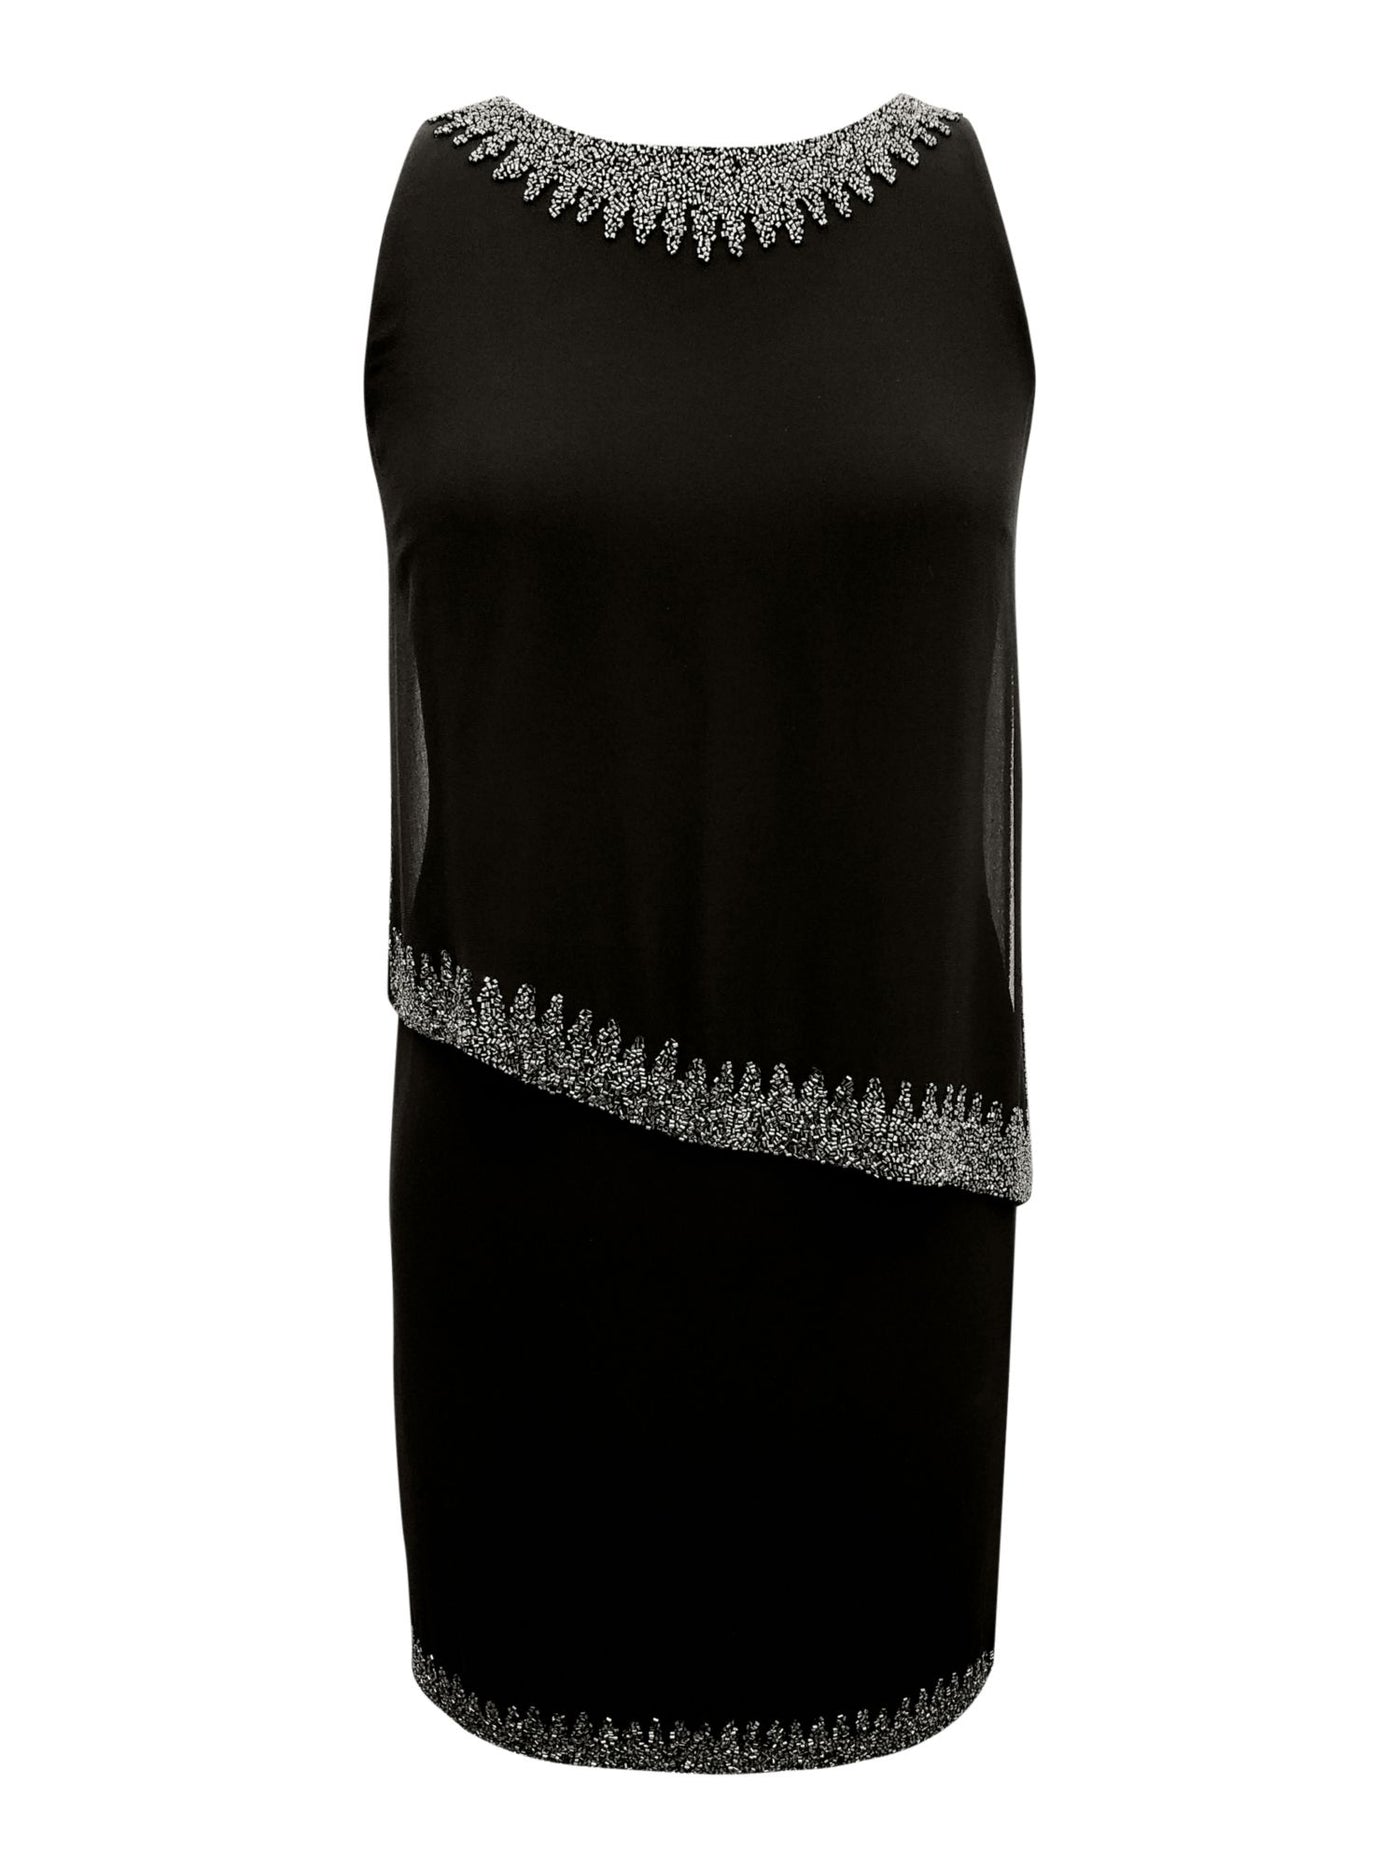 JKARA Womens Black Beaded Sheer Asymmetrical Popover Lined Sleeveless Round Neck Knee Length Cocktail Sheath Dress 6